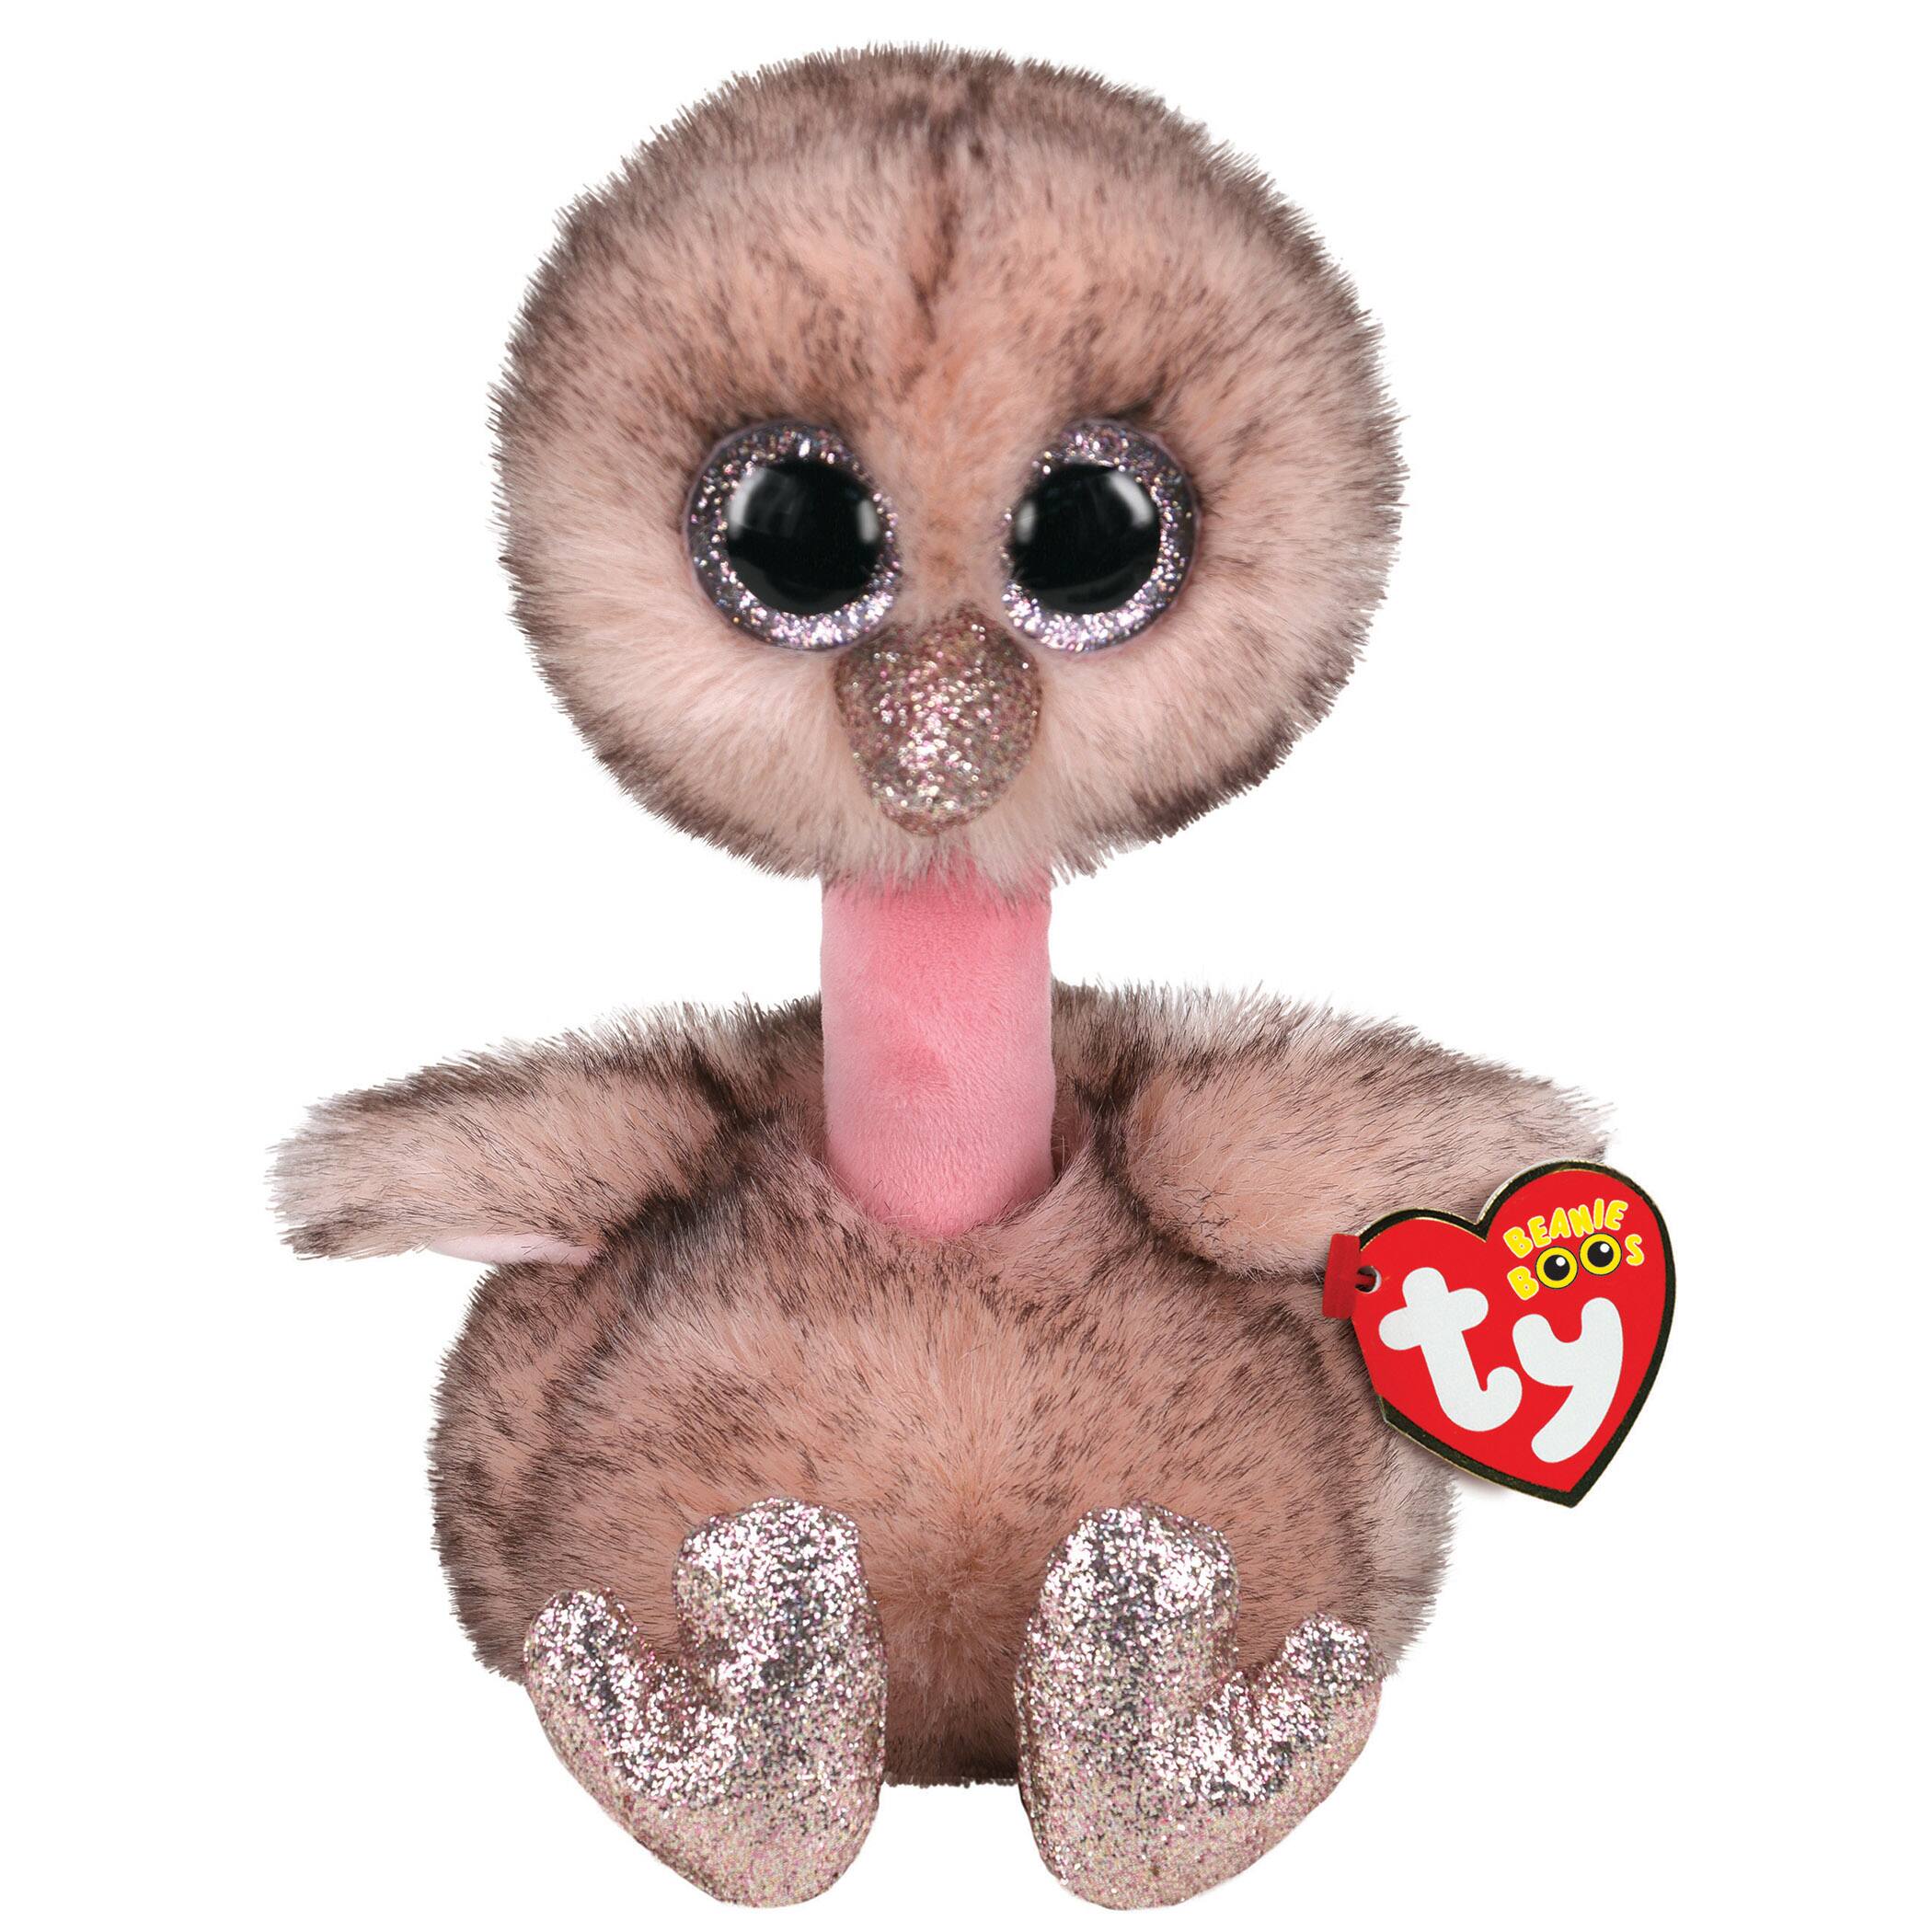 Henna Ostrich Ty Beanie Boos Plush stuffed animal figure 13" Medium new wit tags 